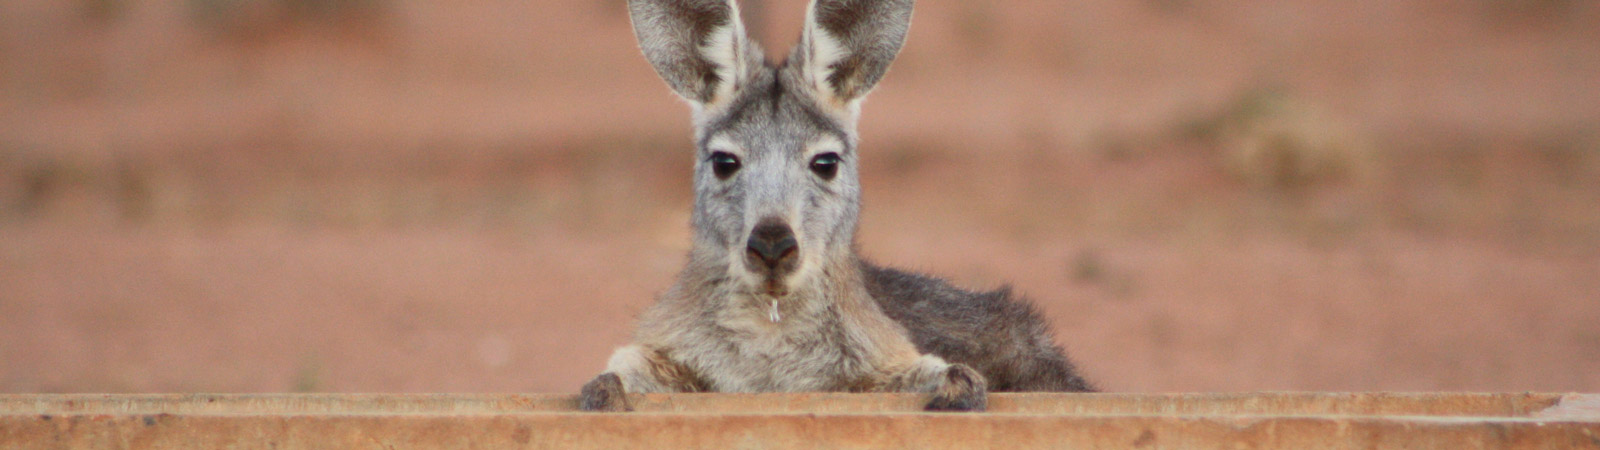 Kangaroo predictive tool project